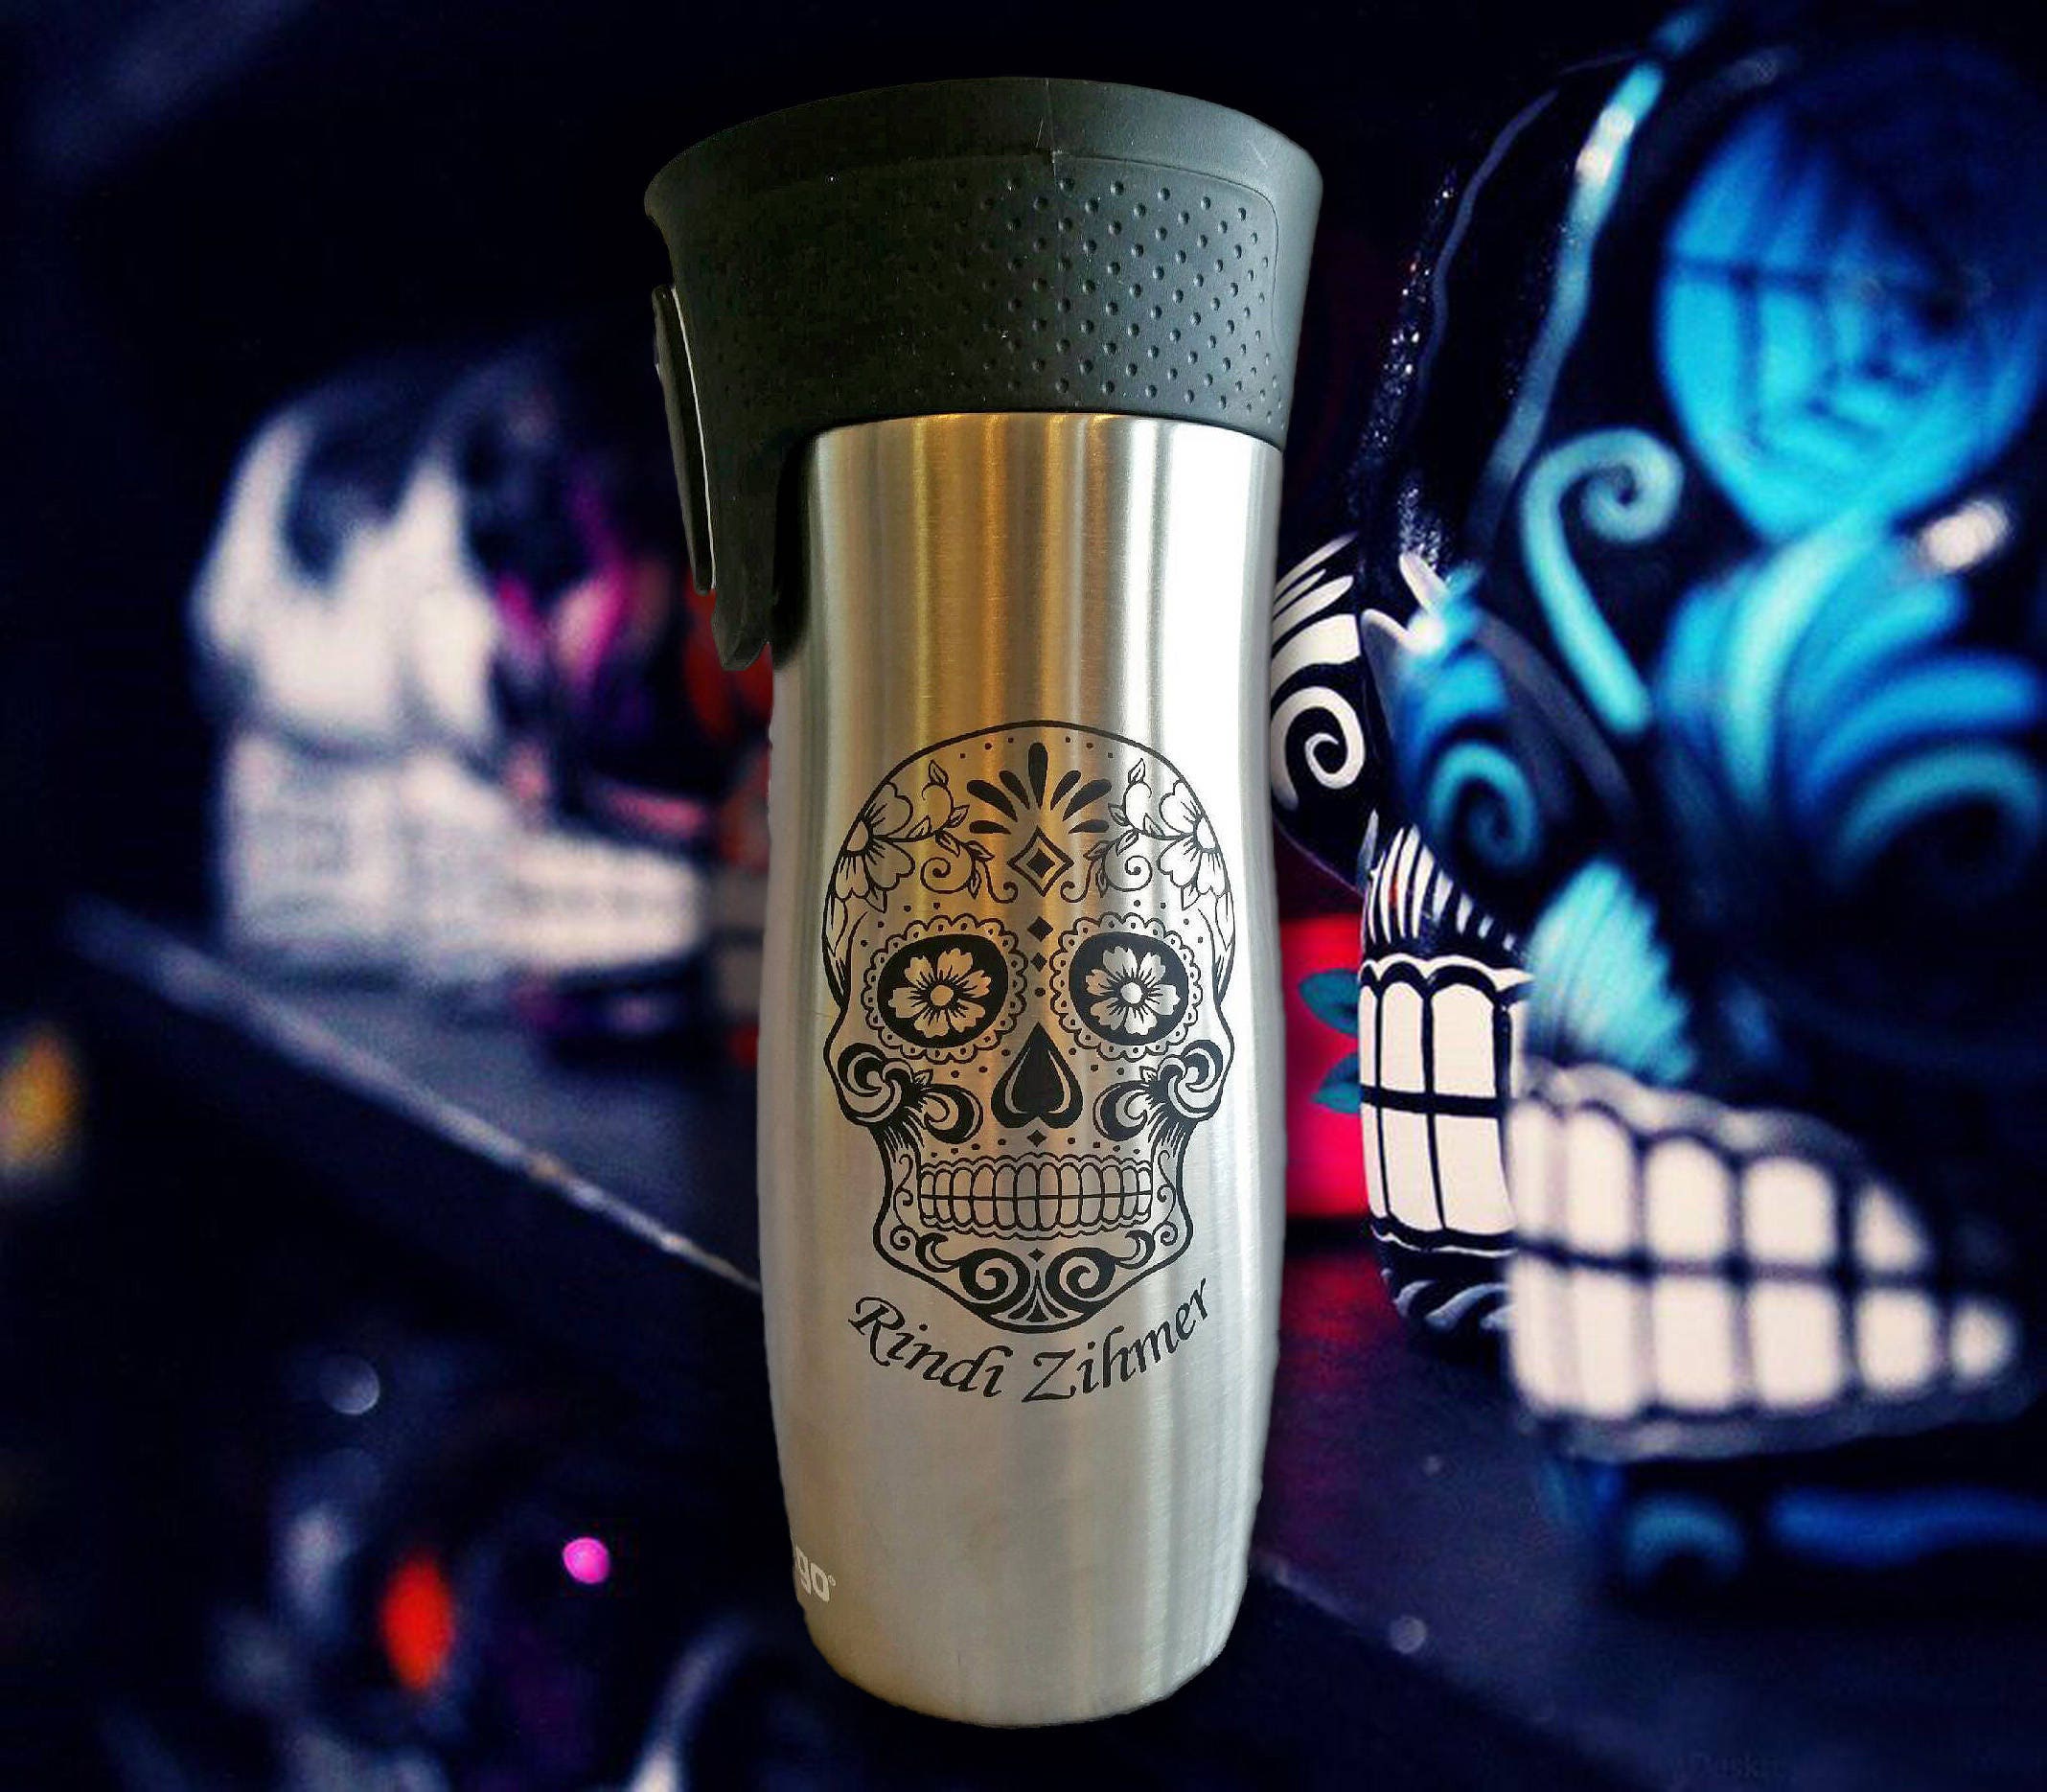 Personalized Sports Travel Mug, 16 Oz Contigo Travel Mugs Add Your Own  Custom Laser Look 